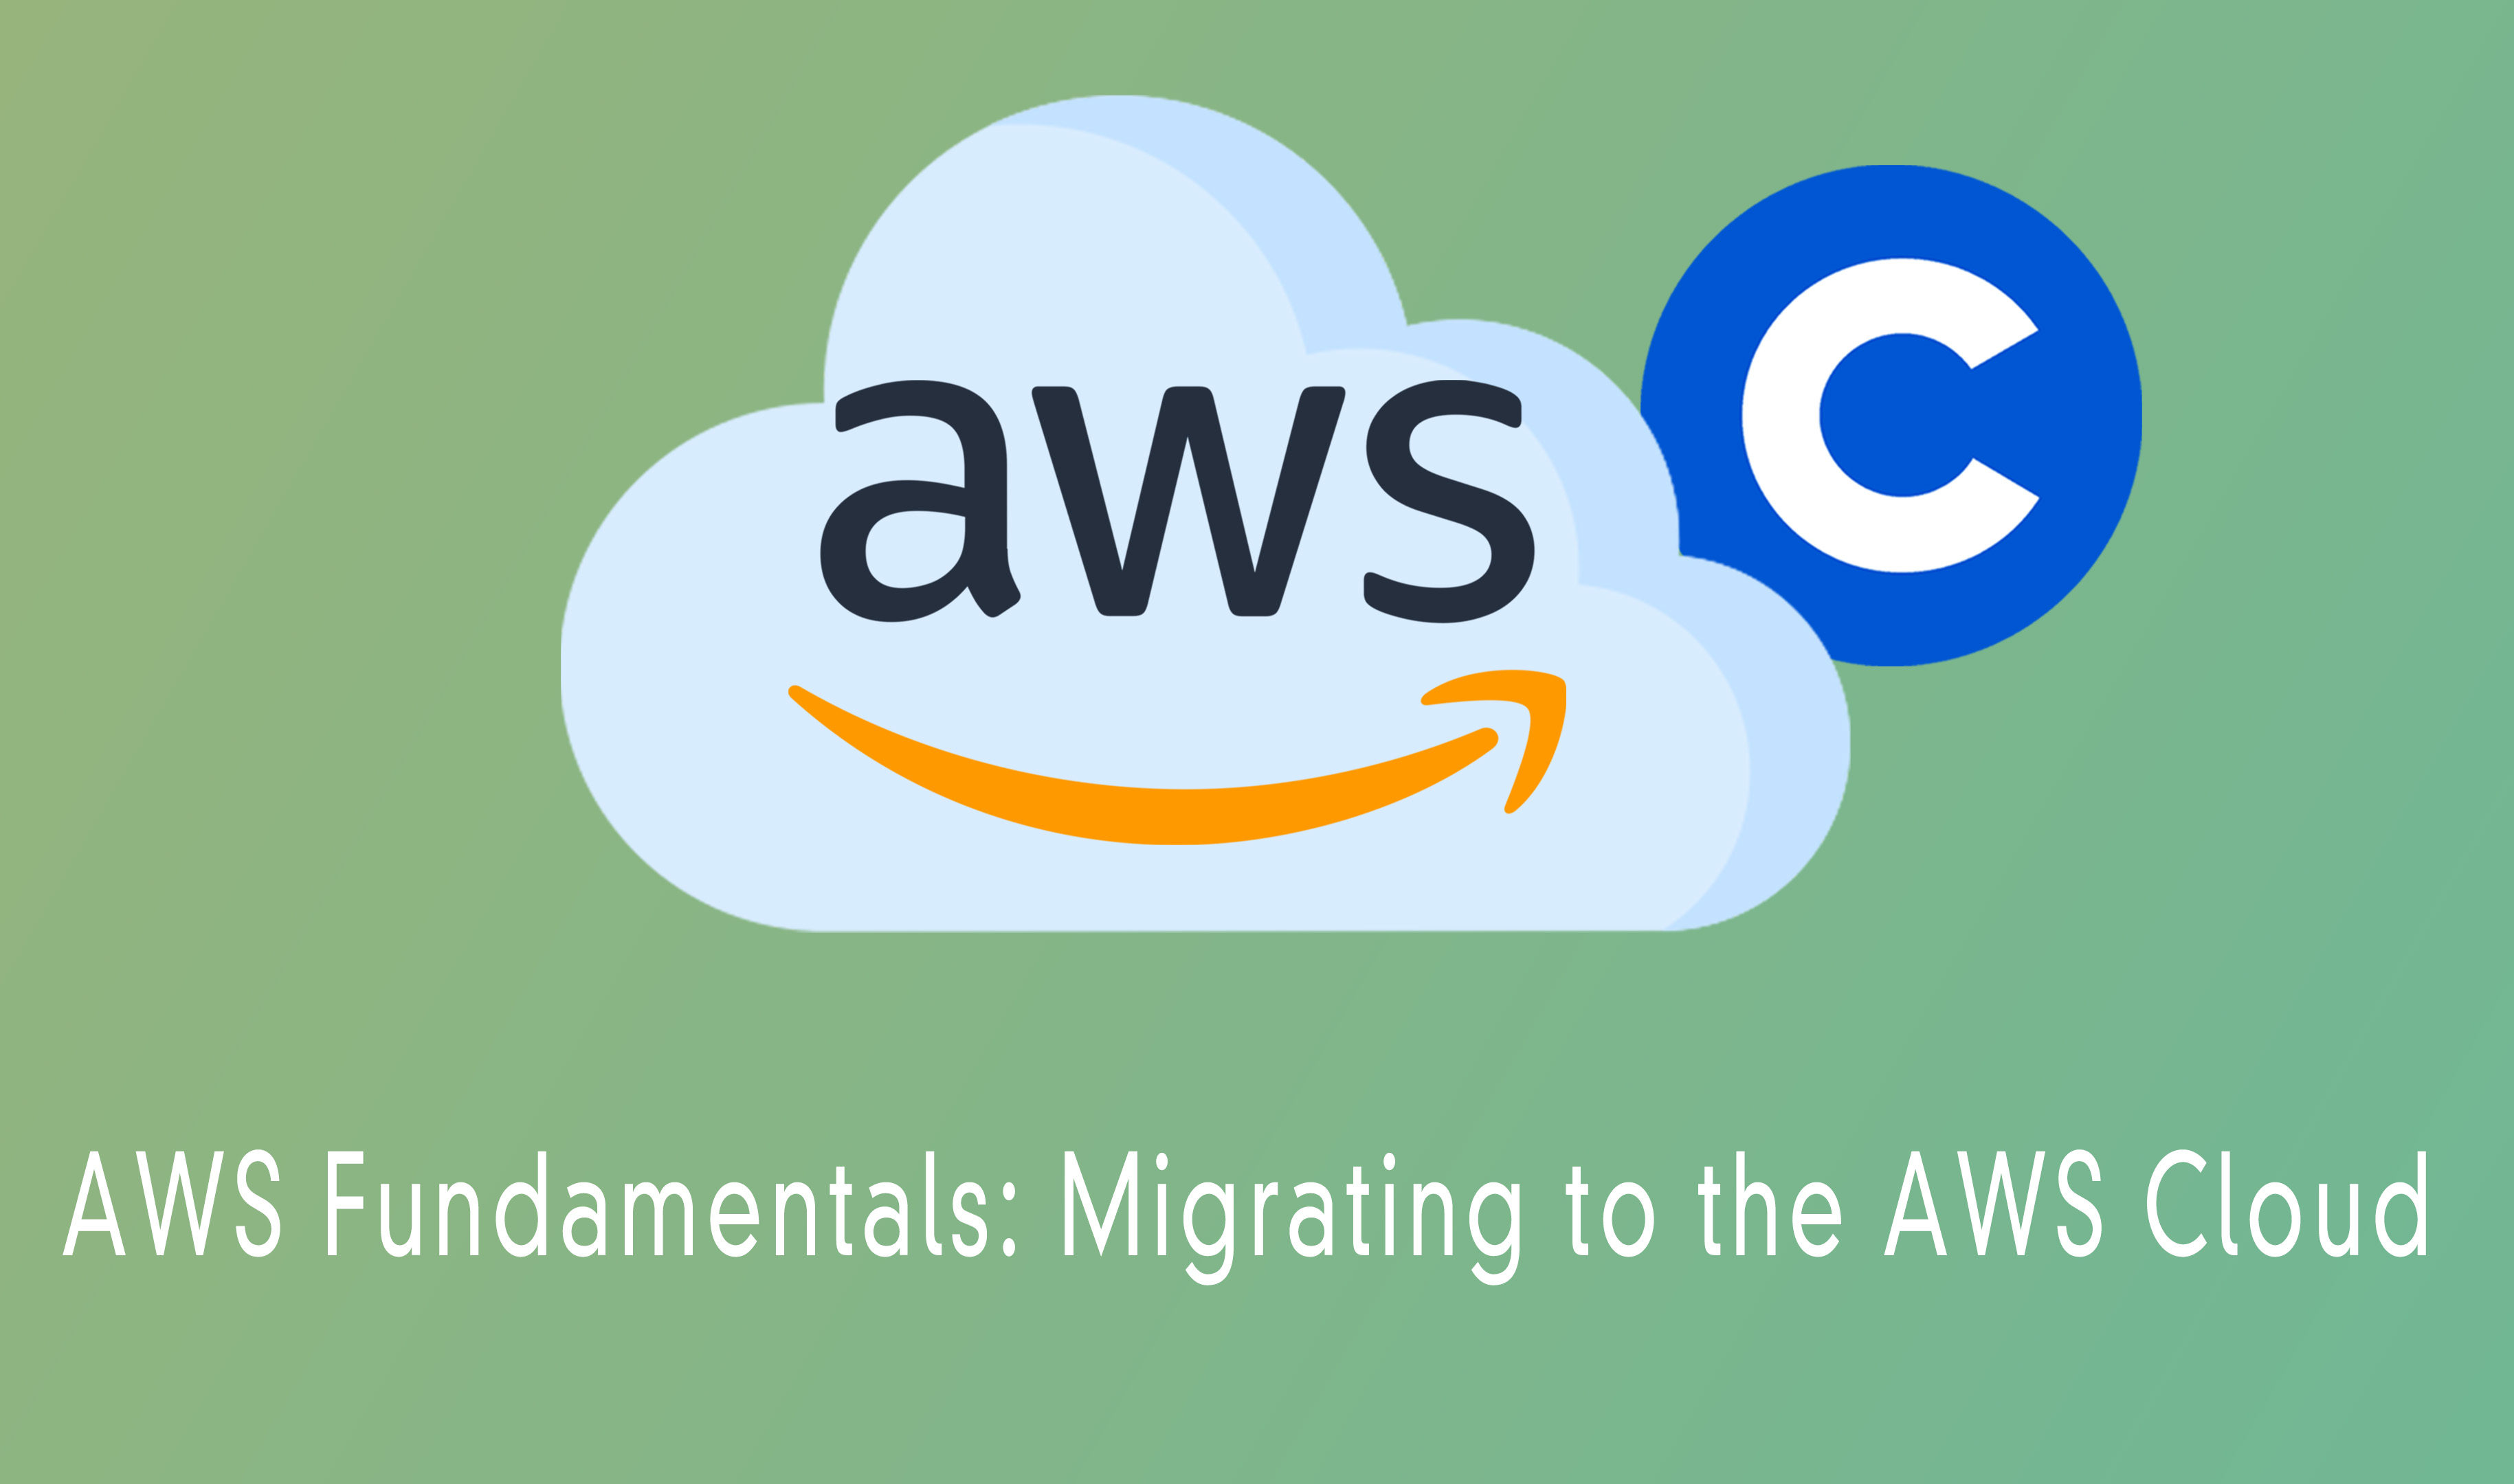 AWS Fundamentals: Migrating to the AWS Cloud